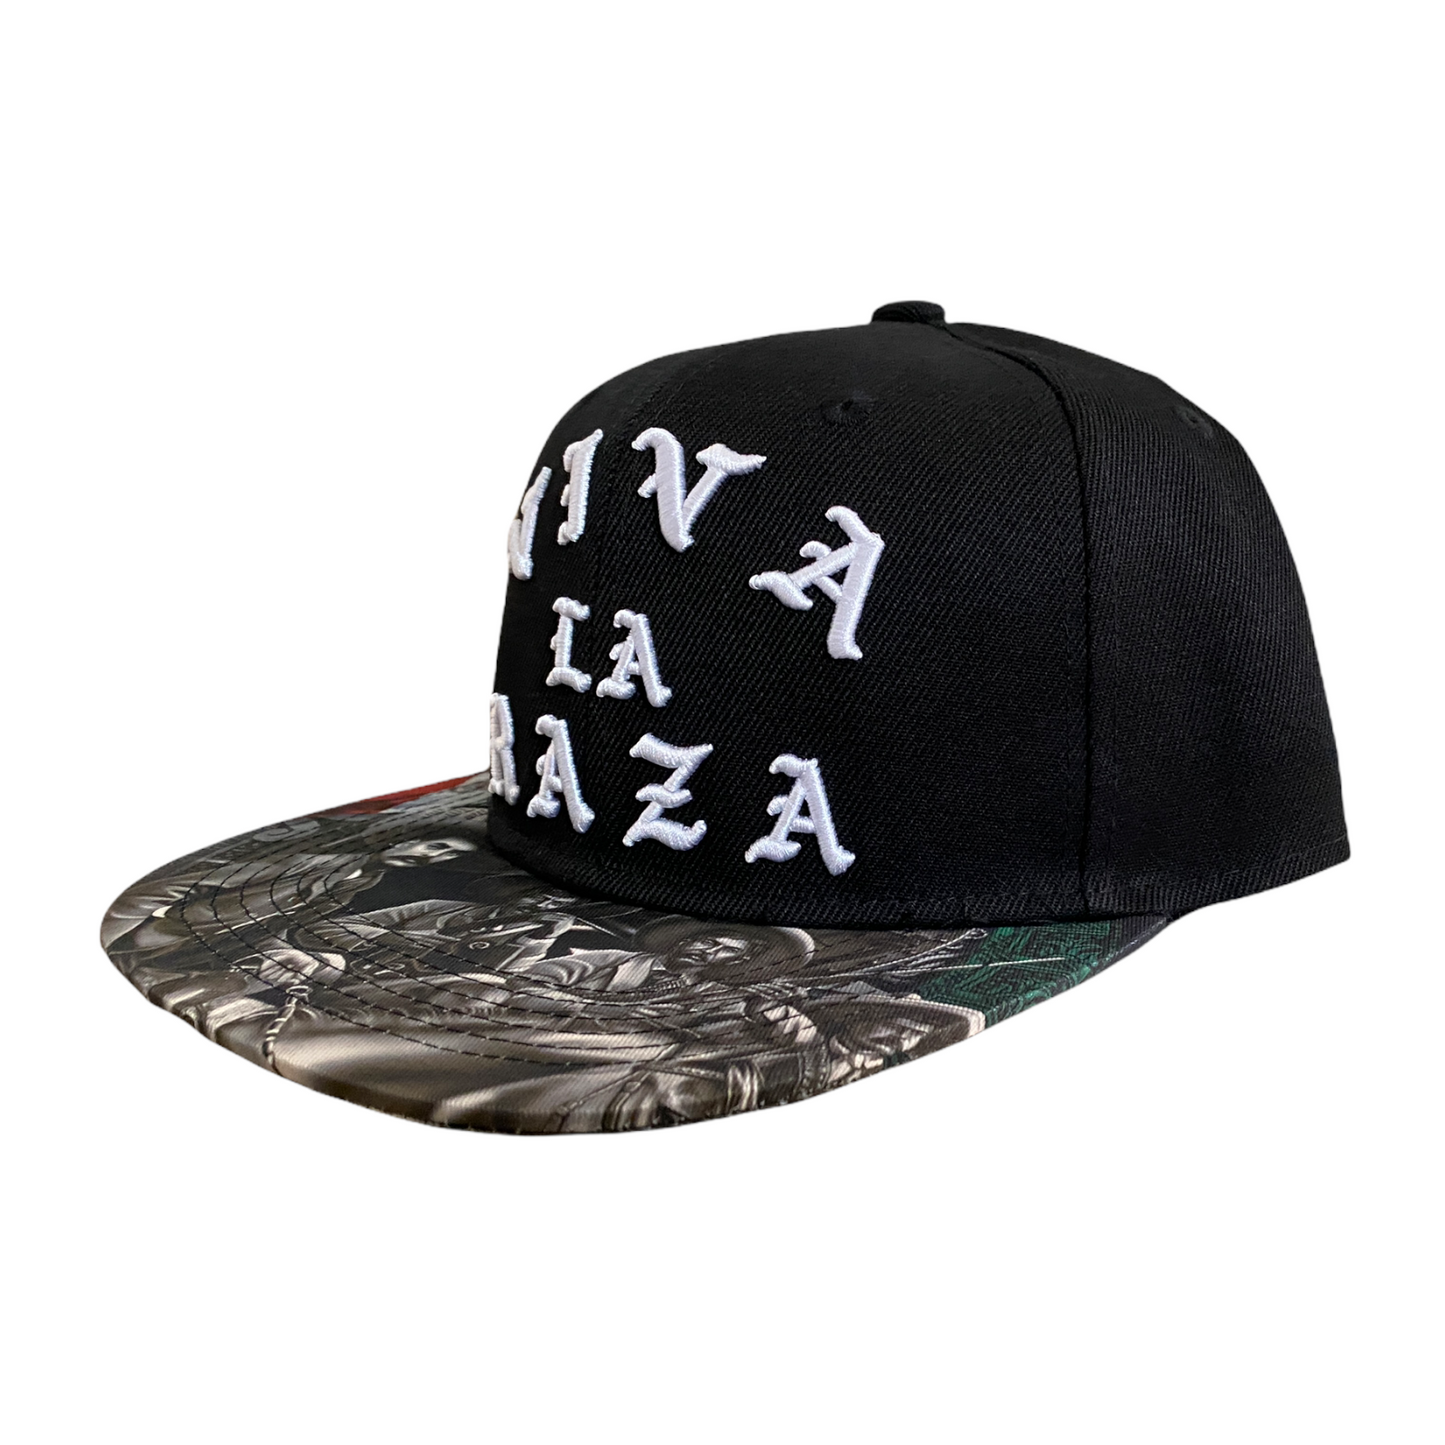 Viva La Raza SnapBack Hat *LIMITED EDITION*